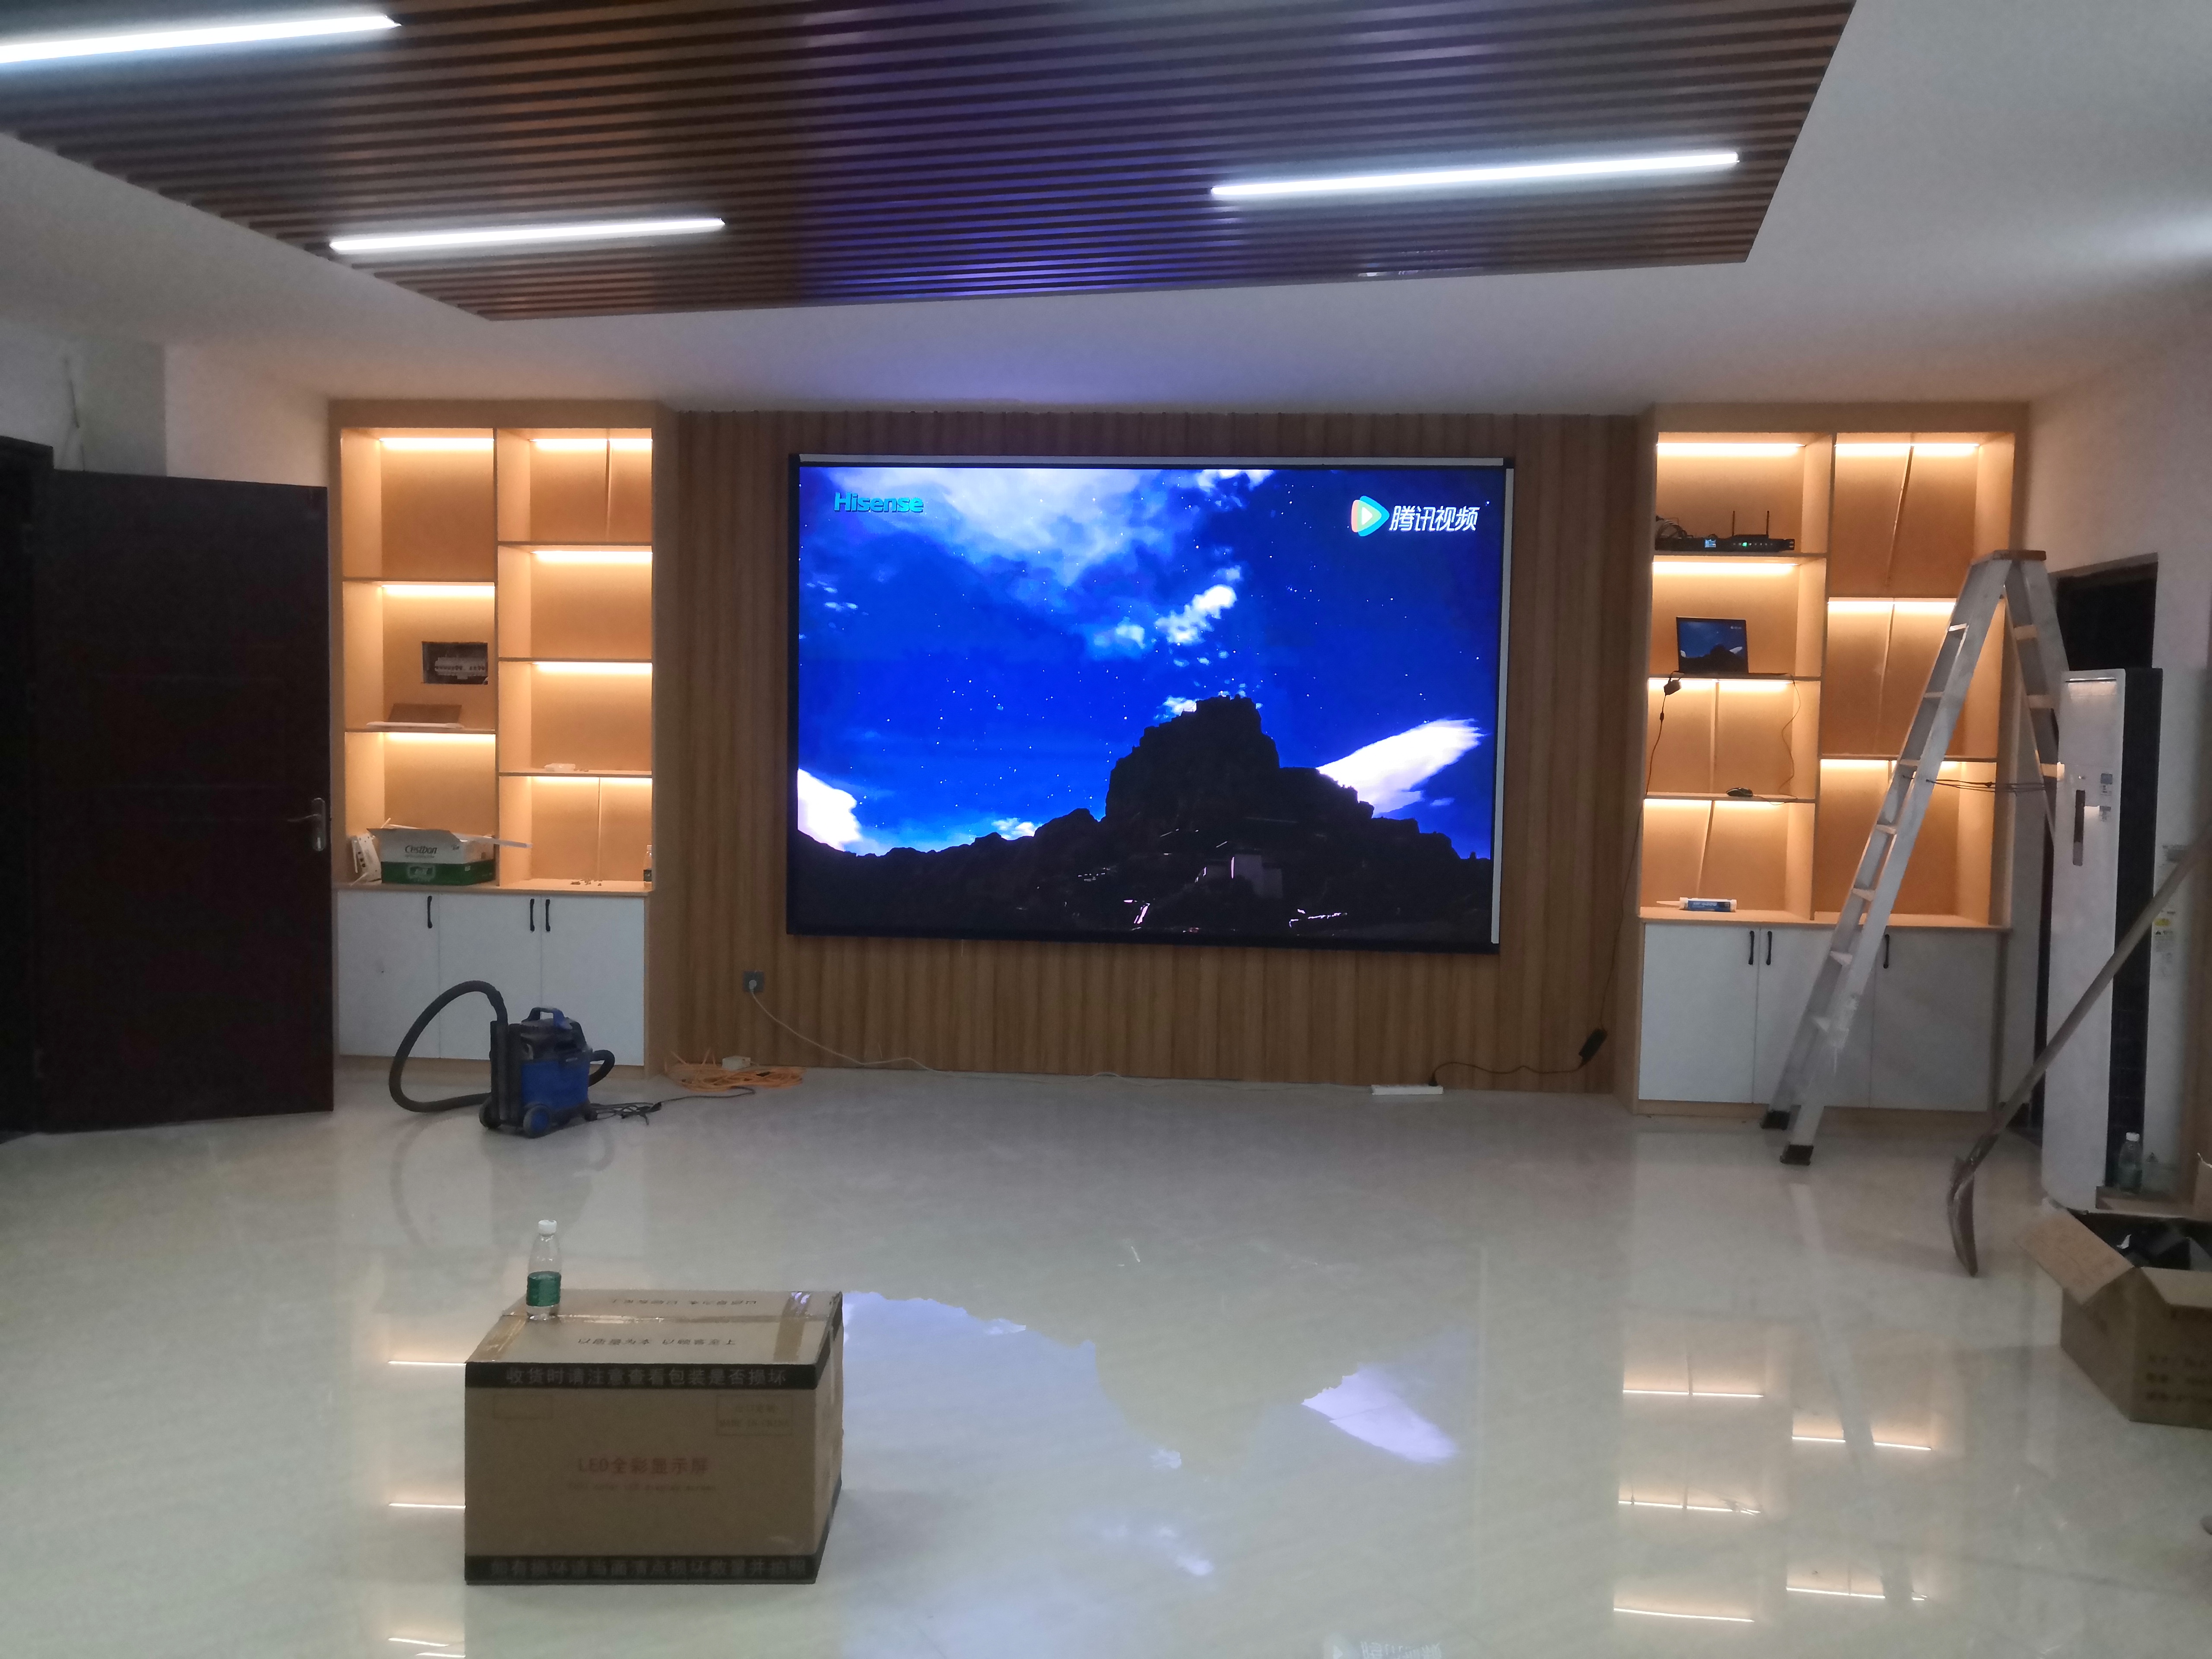 P2.5常规LED显示屏-梅州市五华县揭博高速华阳管理中心